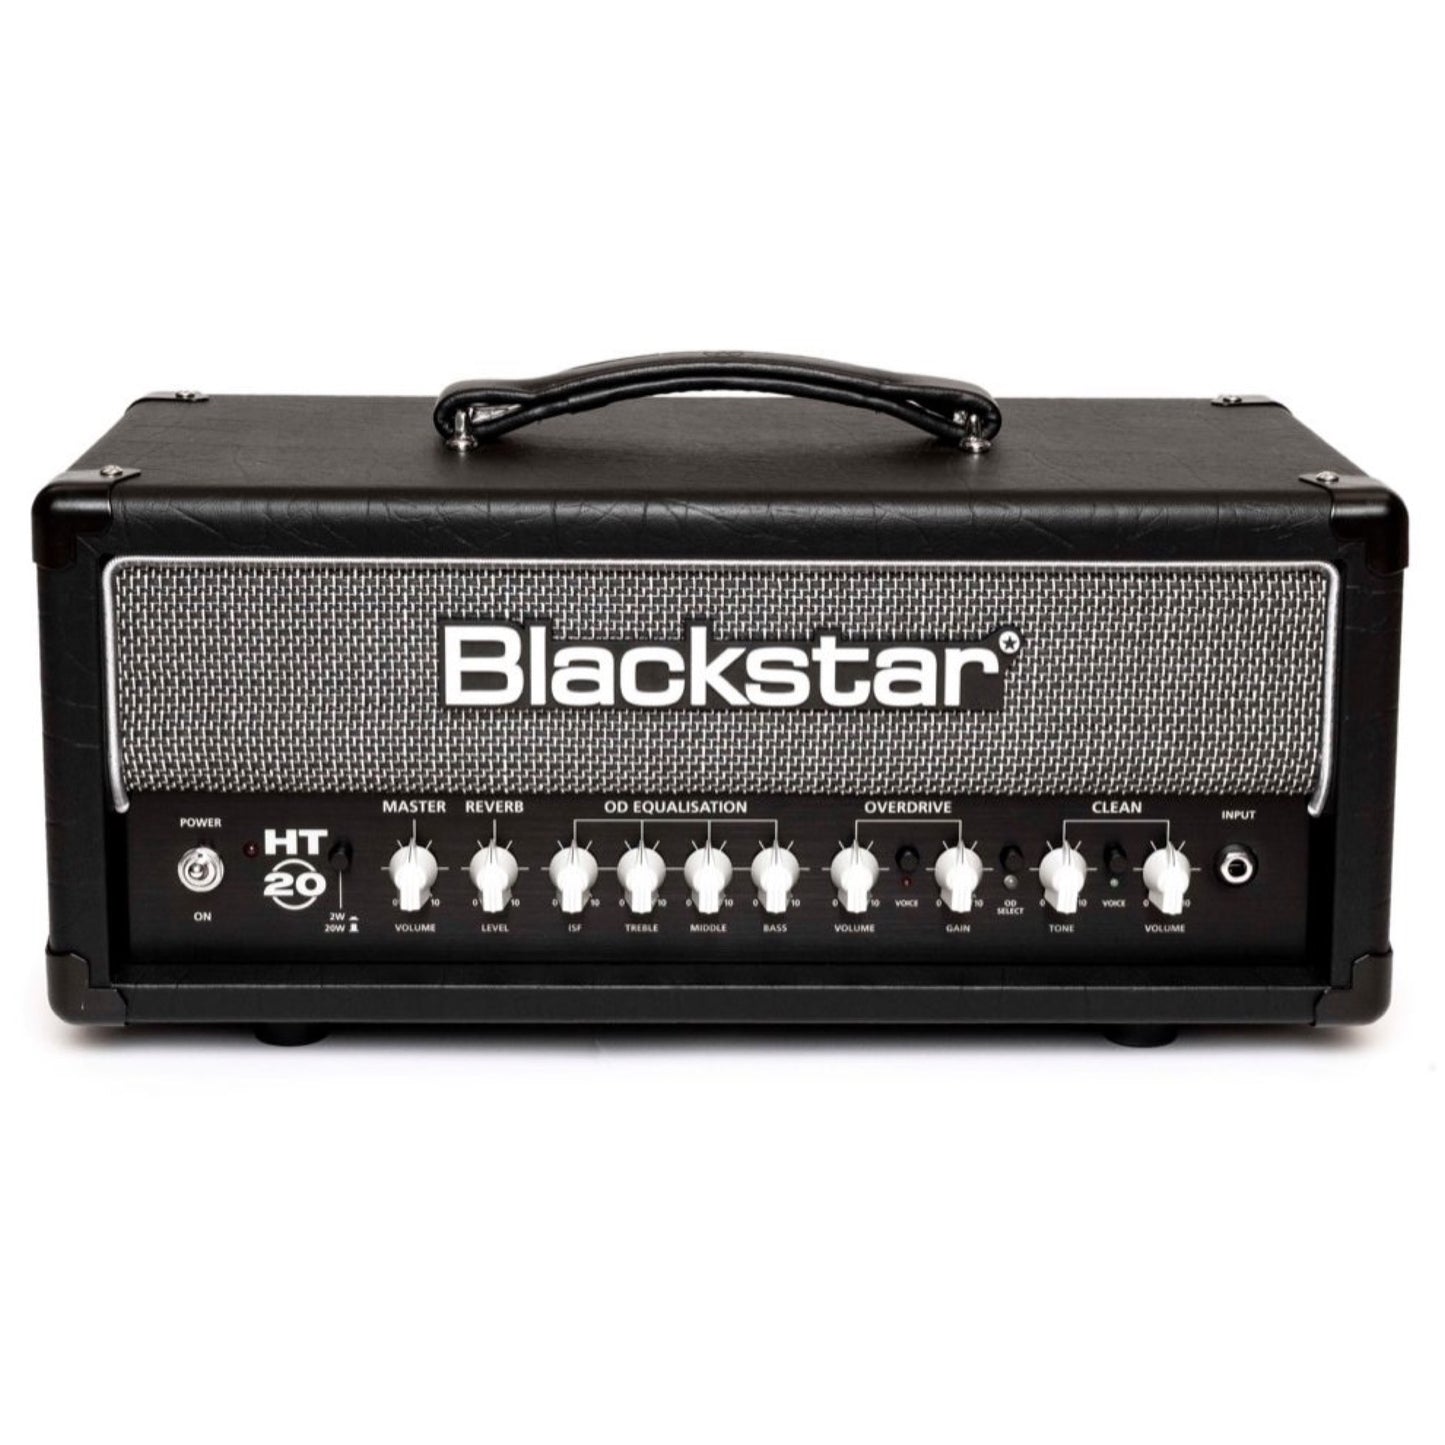 Blackstar HT20RH MkII Guitar Amplifier Head with Reverb (20 Watts)